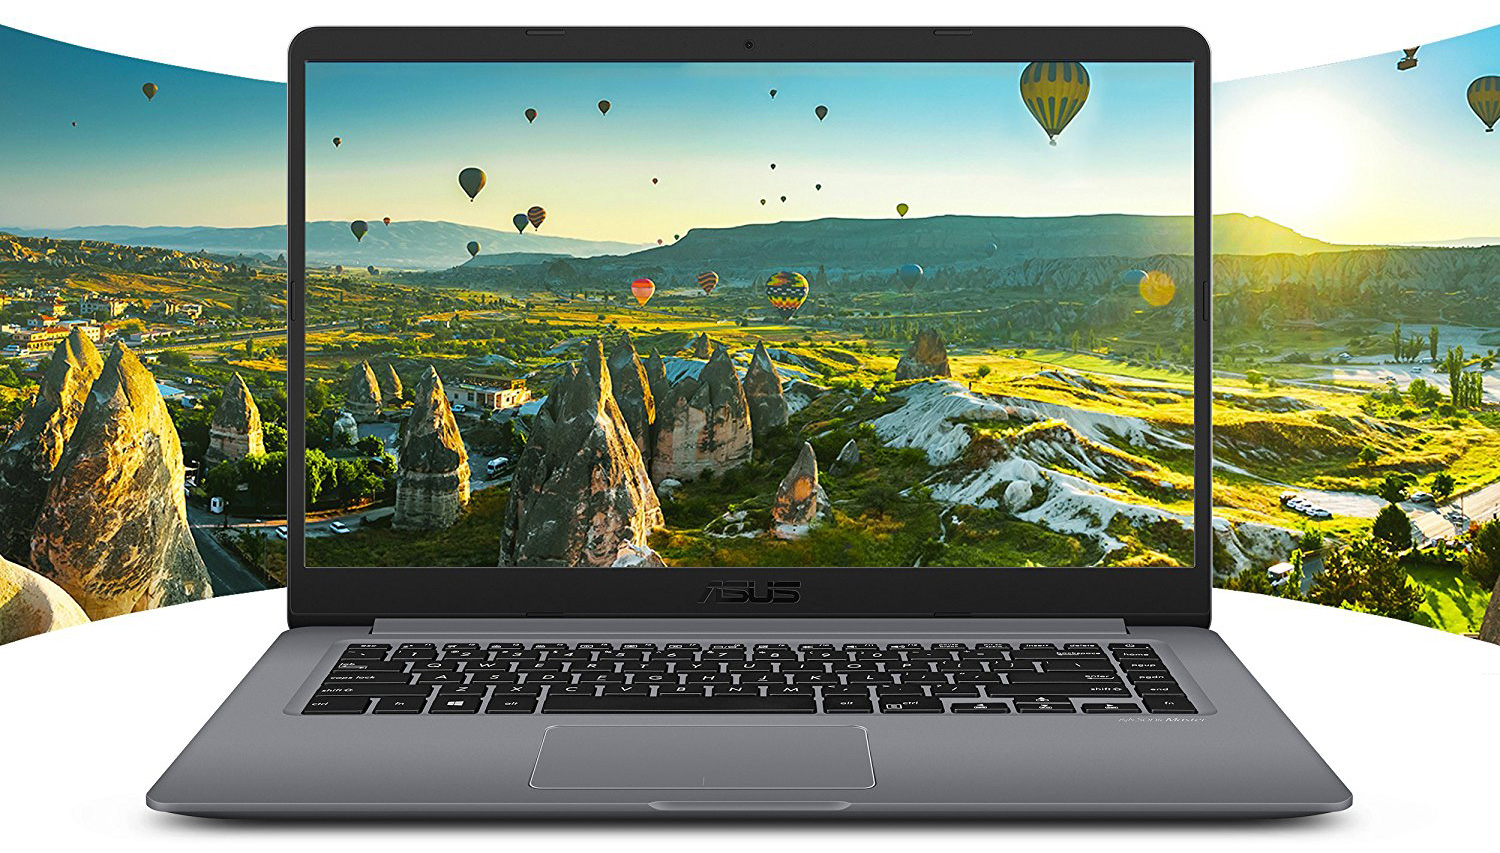 ASUS VivoBook S510 - i5-8250U · GeForce MX150 · 15.6”, Full HD 